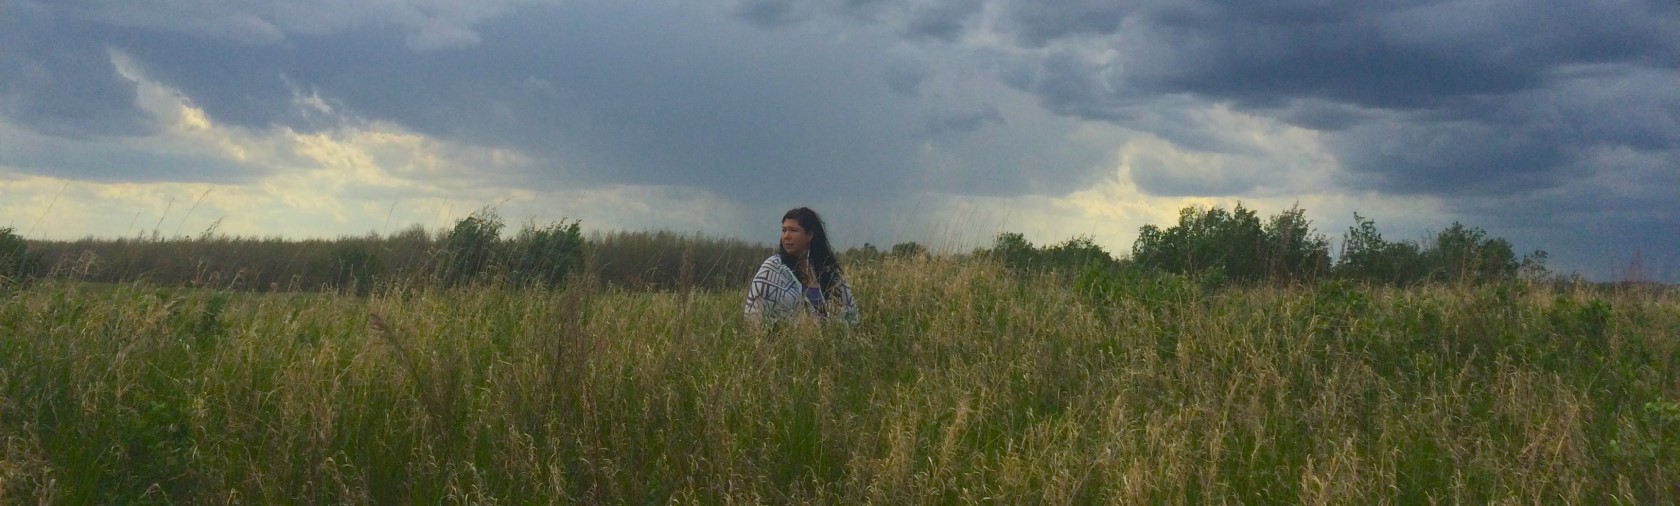 Tasha Hubbard standing in a field